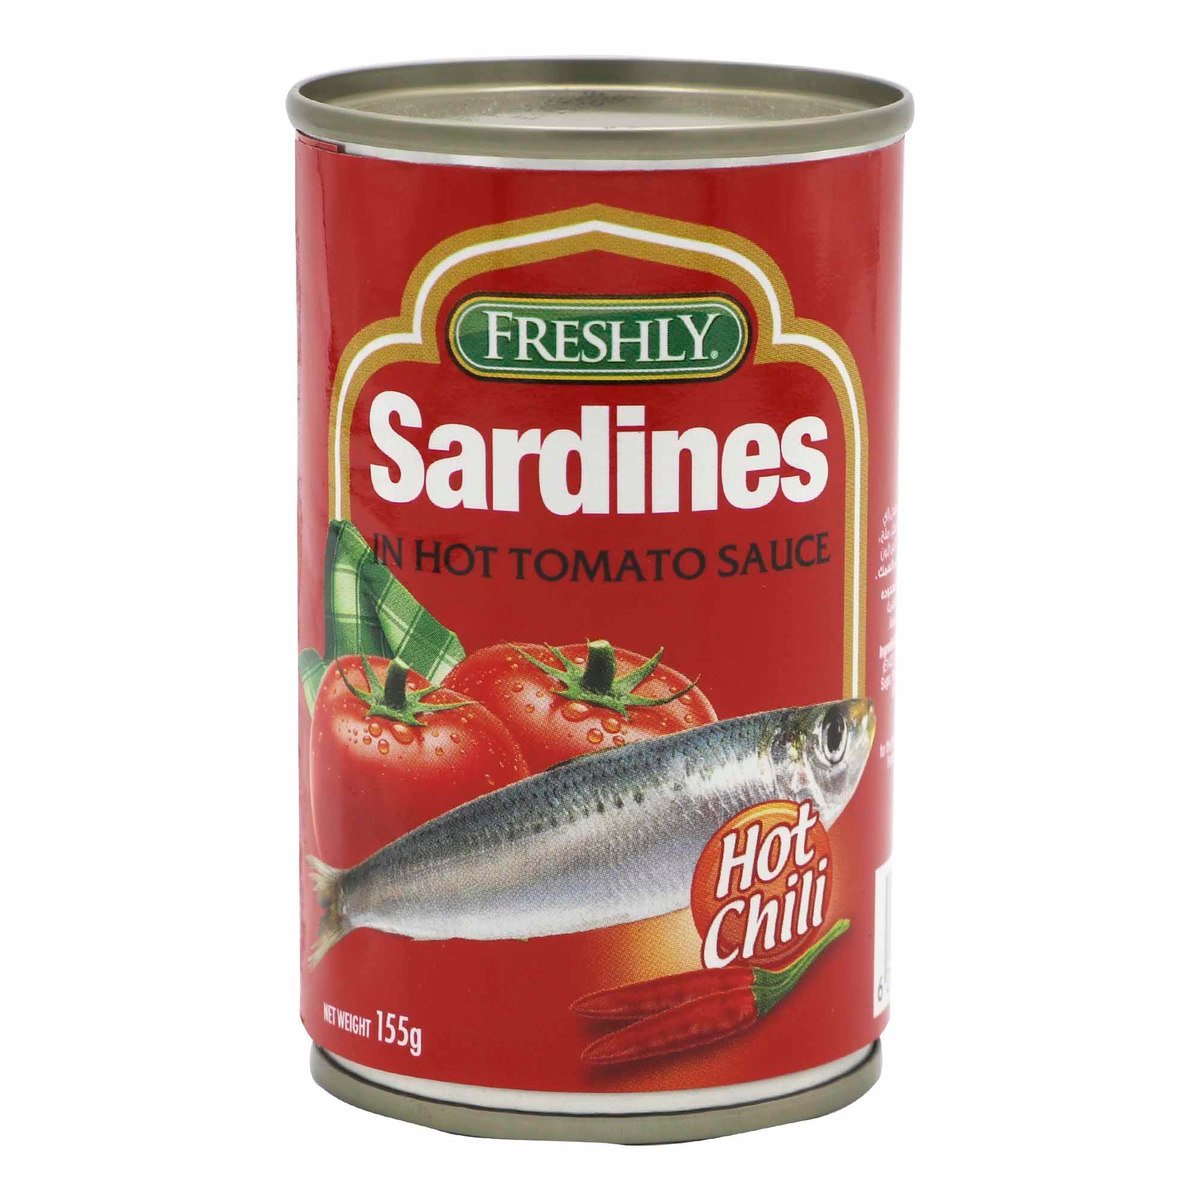 Freshly Sardines in Hot Tomato Sauce155g